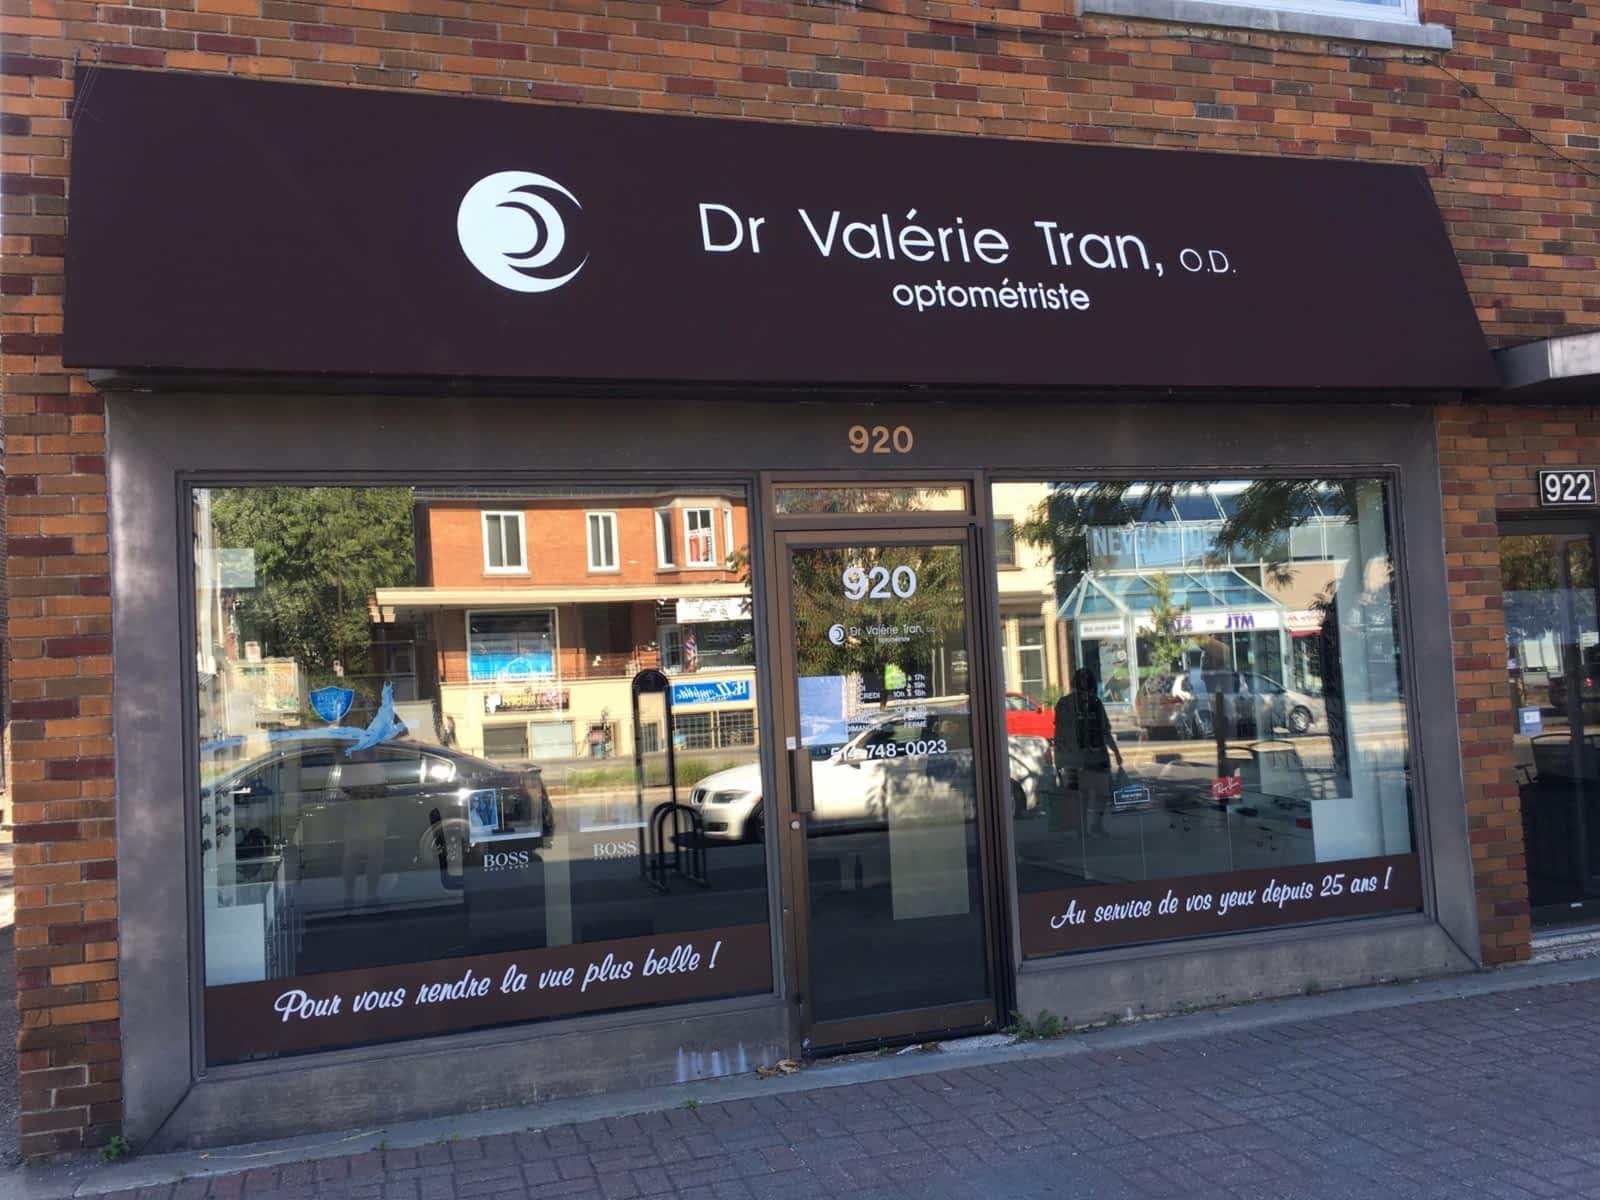 Clinique d'Optometrie Valerie Tran - Optometrist